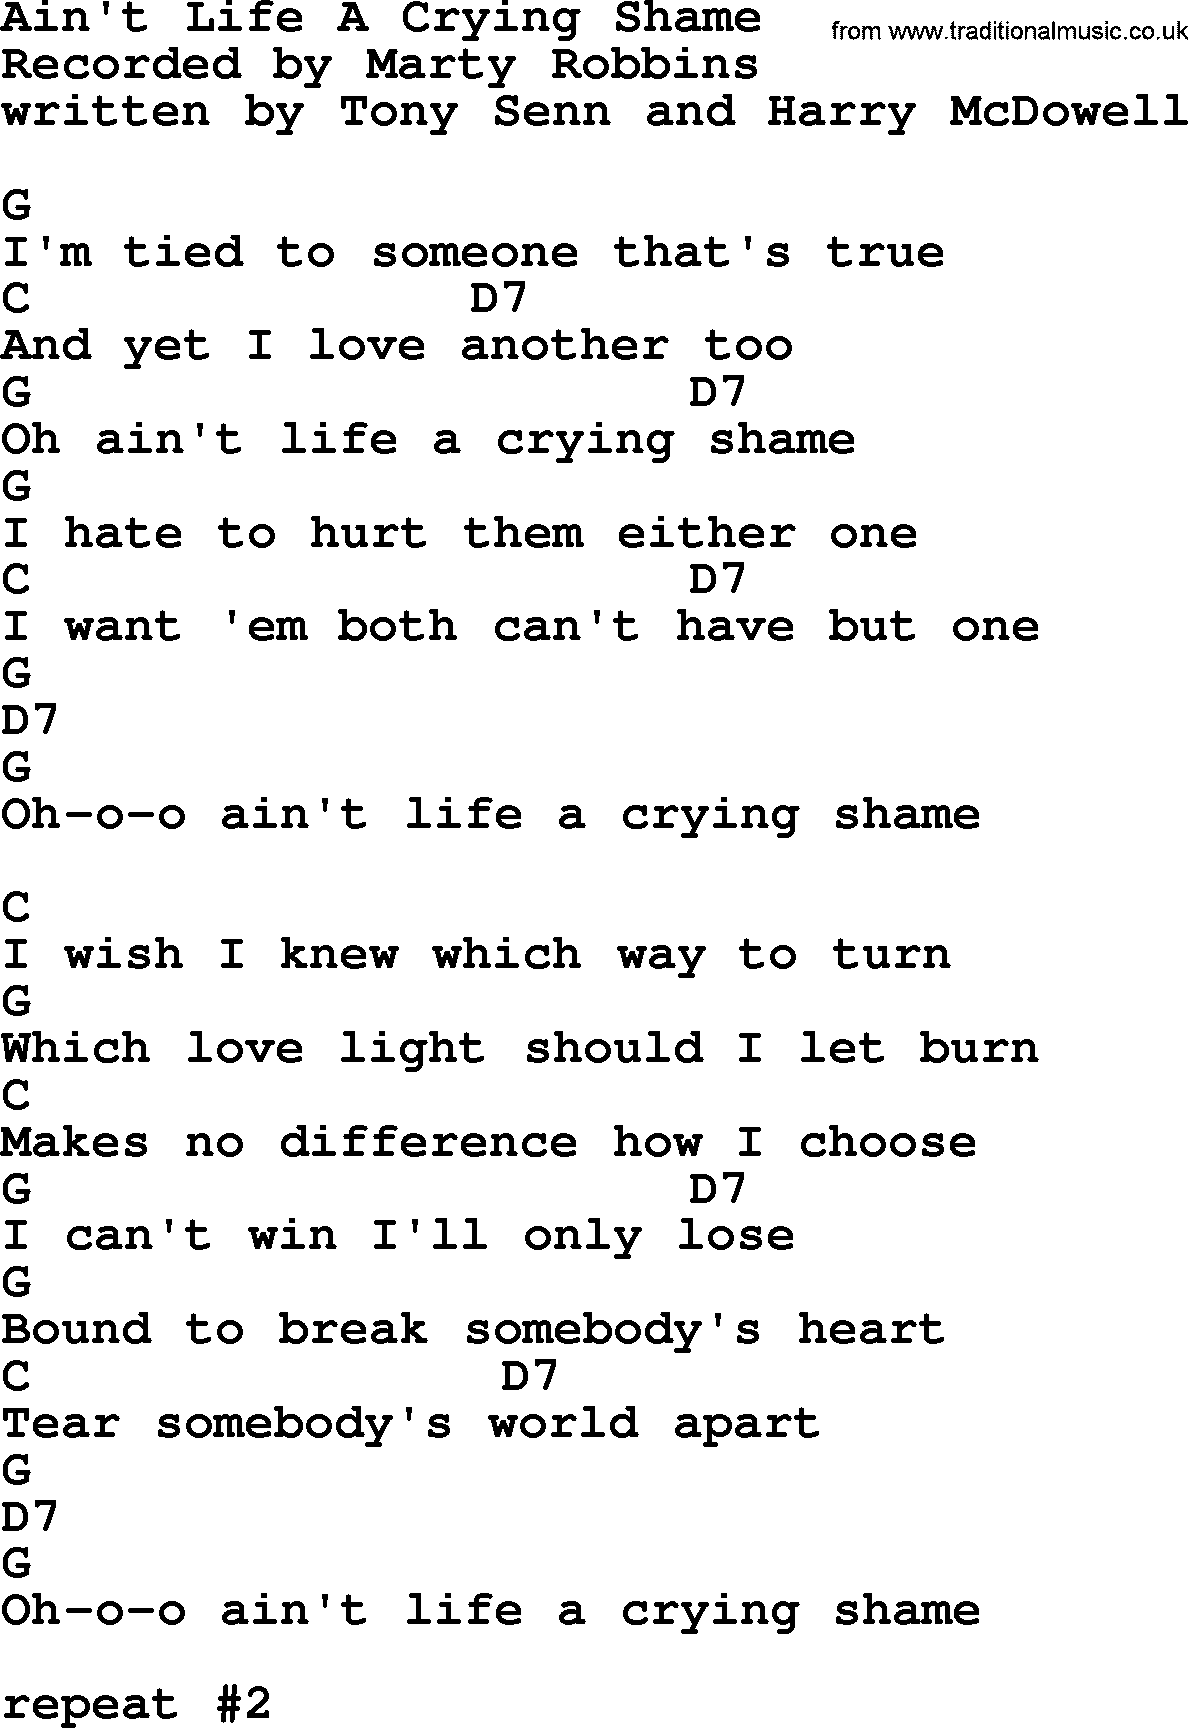 Marty Robbins song: Ain't Life A Crying Shame, lyrics and chords